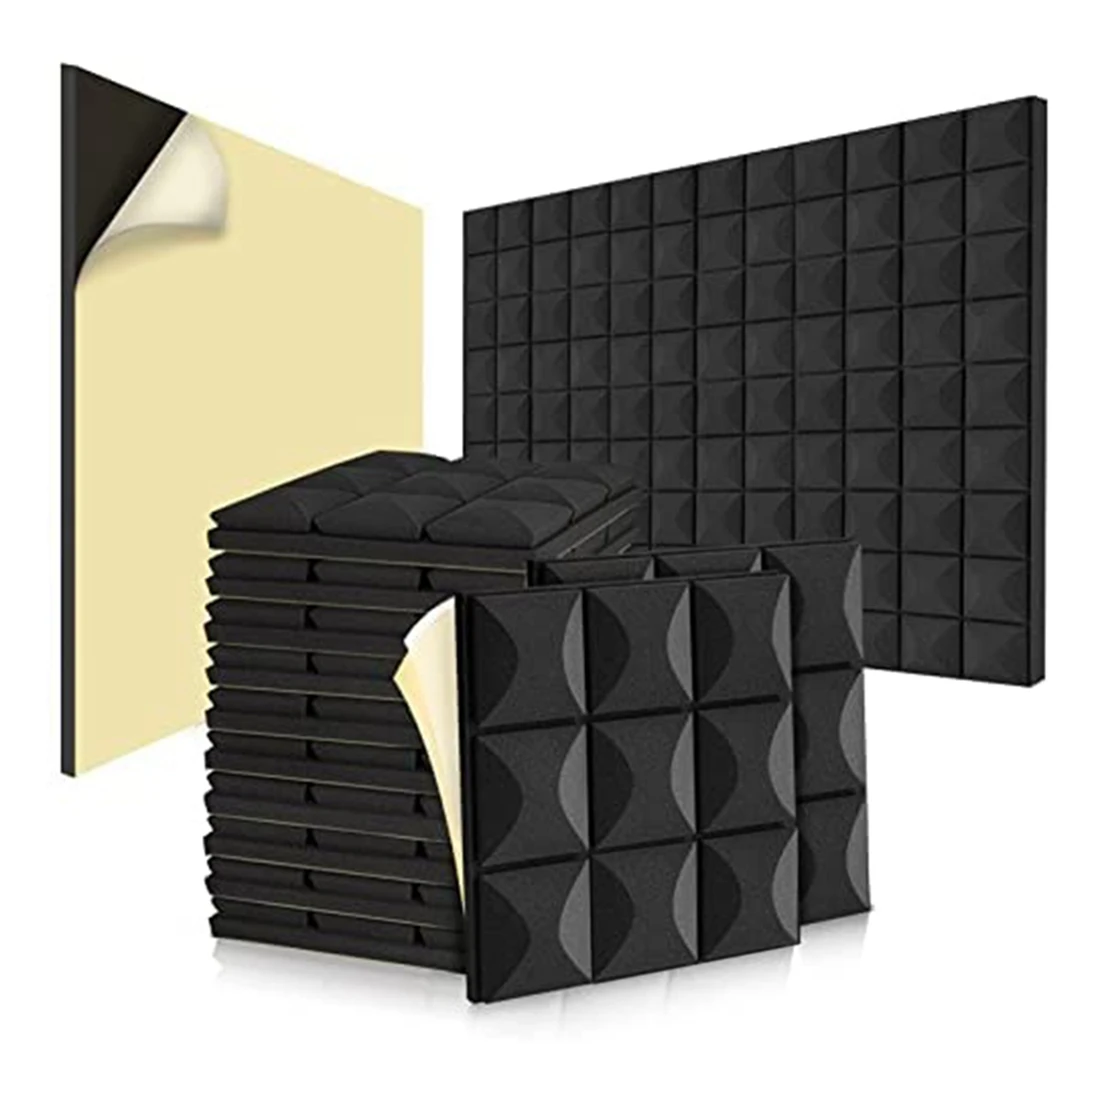 

24 Pack Mushroom Acoustic Foam Panels, Self-Adhesive Acoustic Foam Panels,Absorbs Noise Reduction,for Music Studio,Black